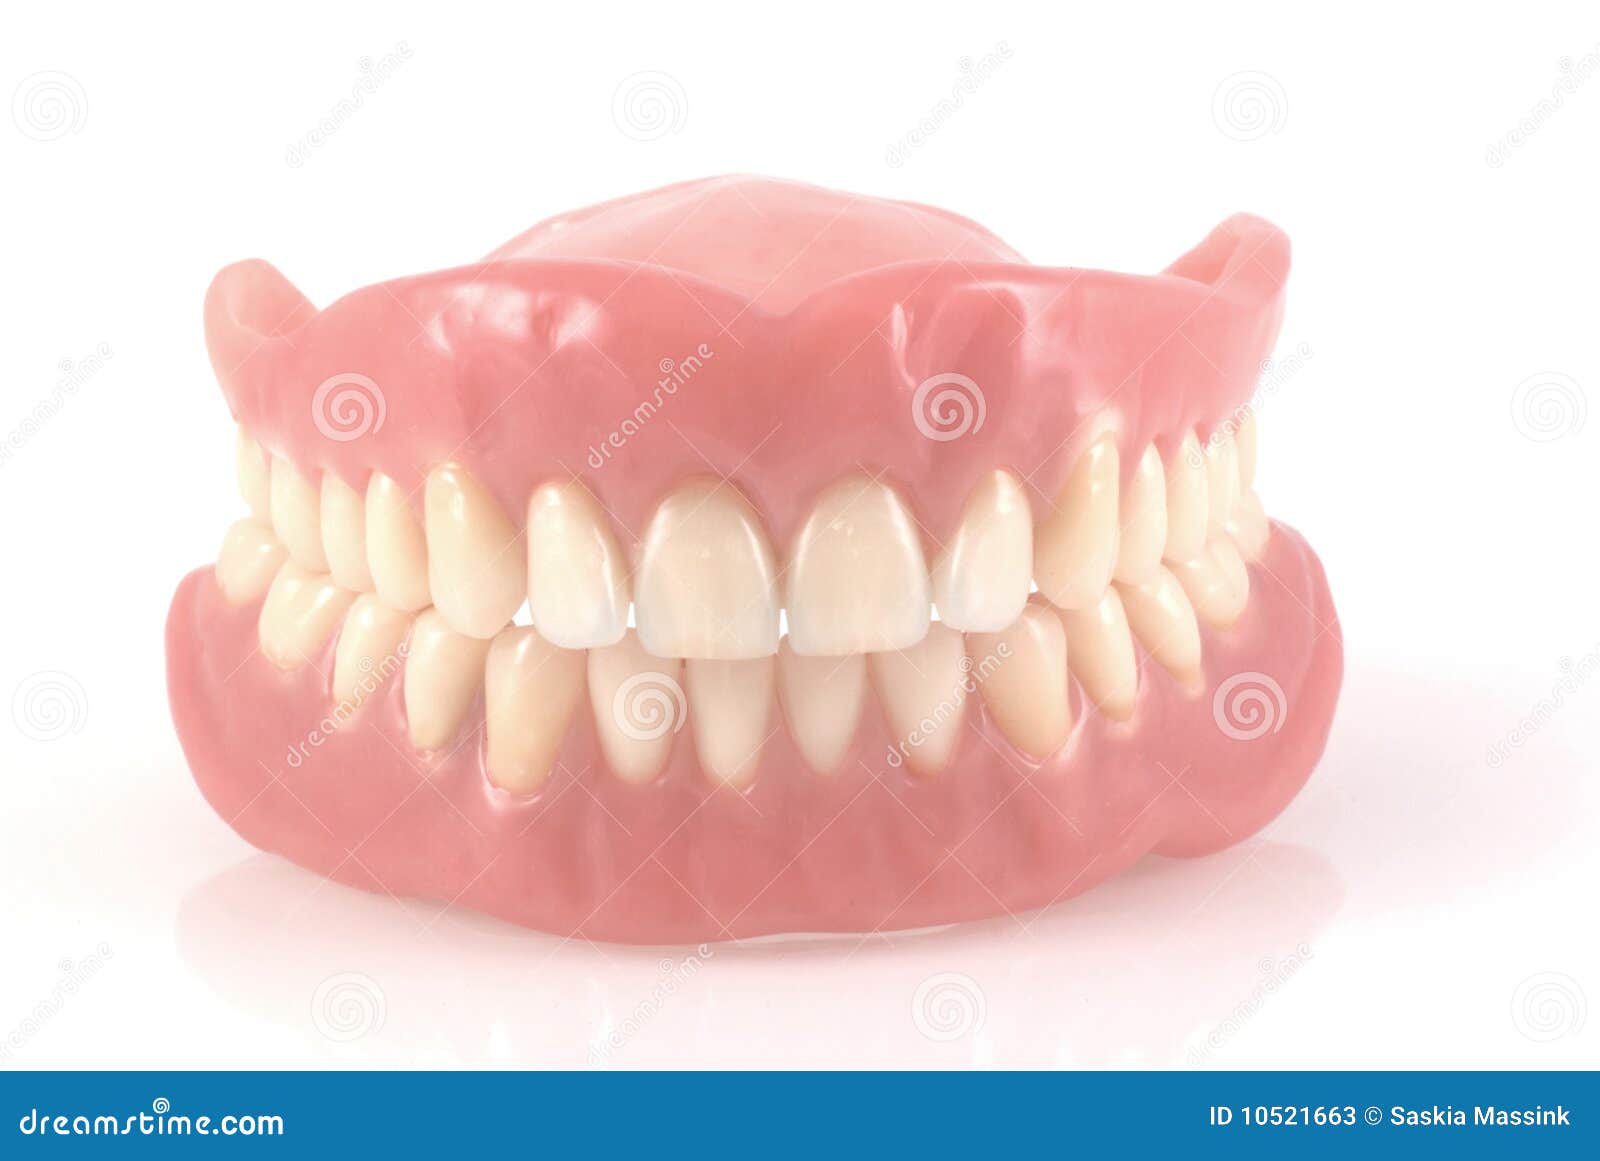 dentures.